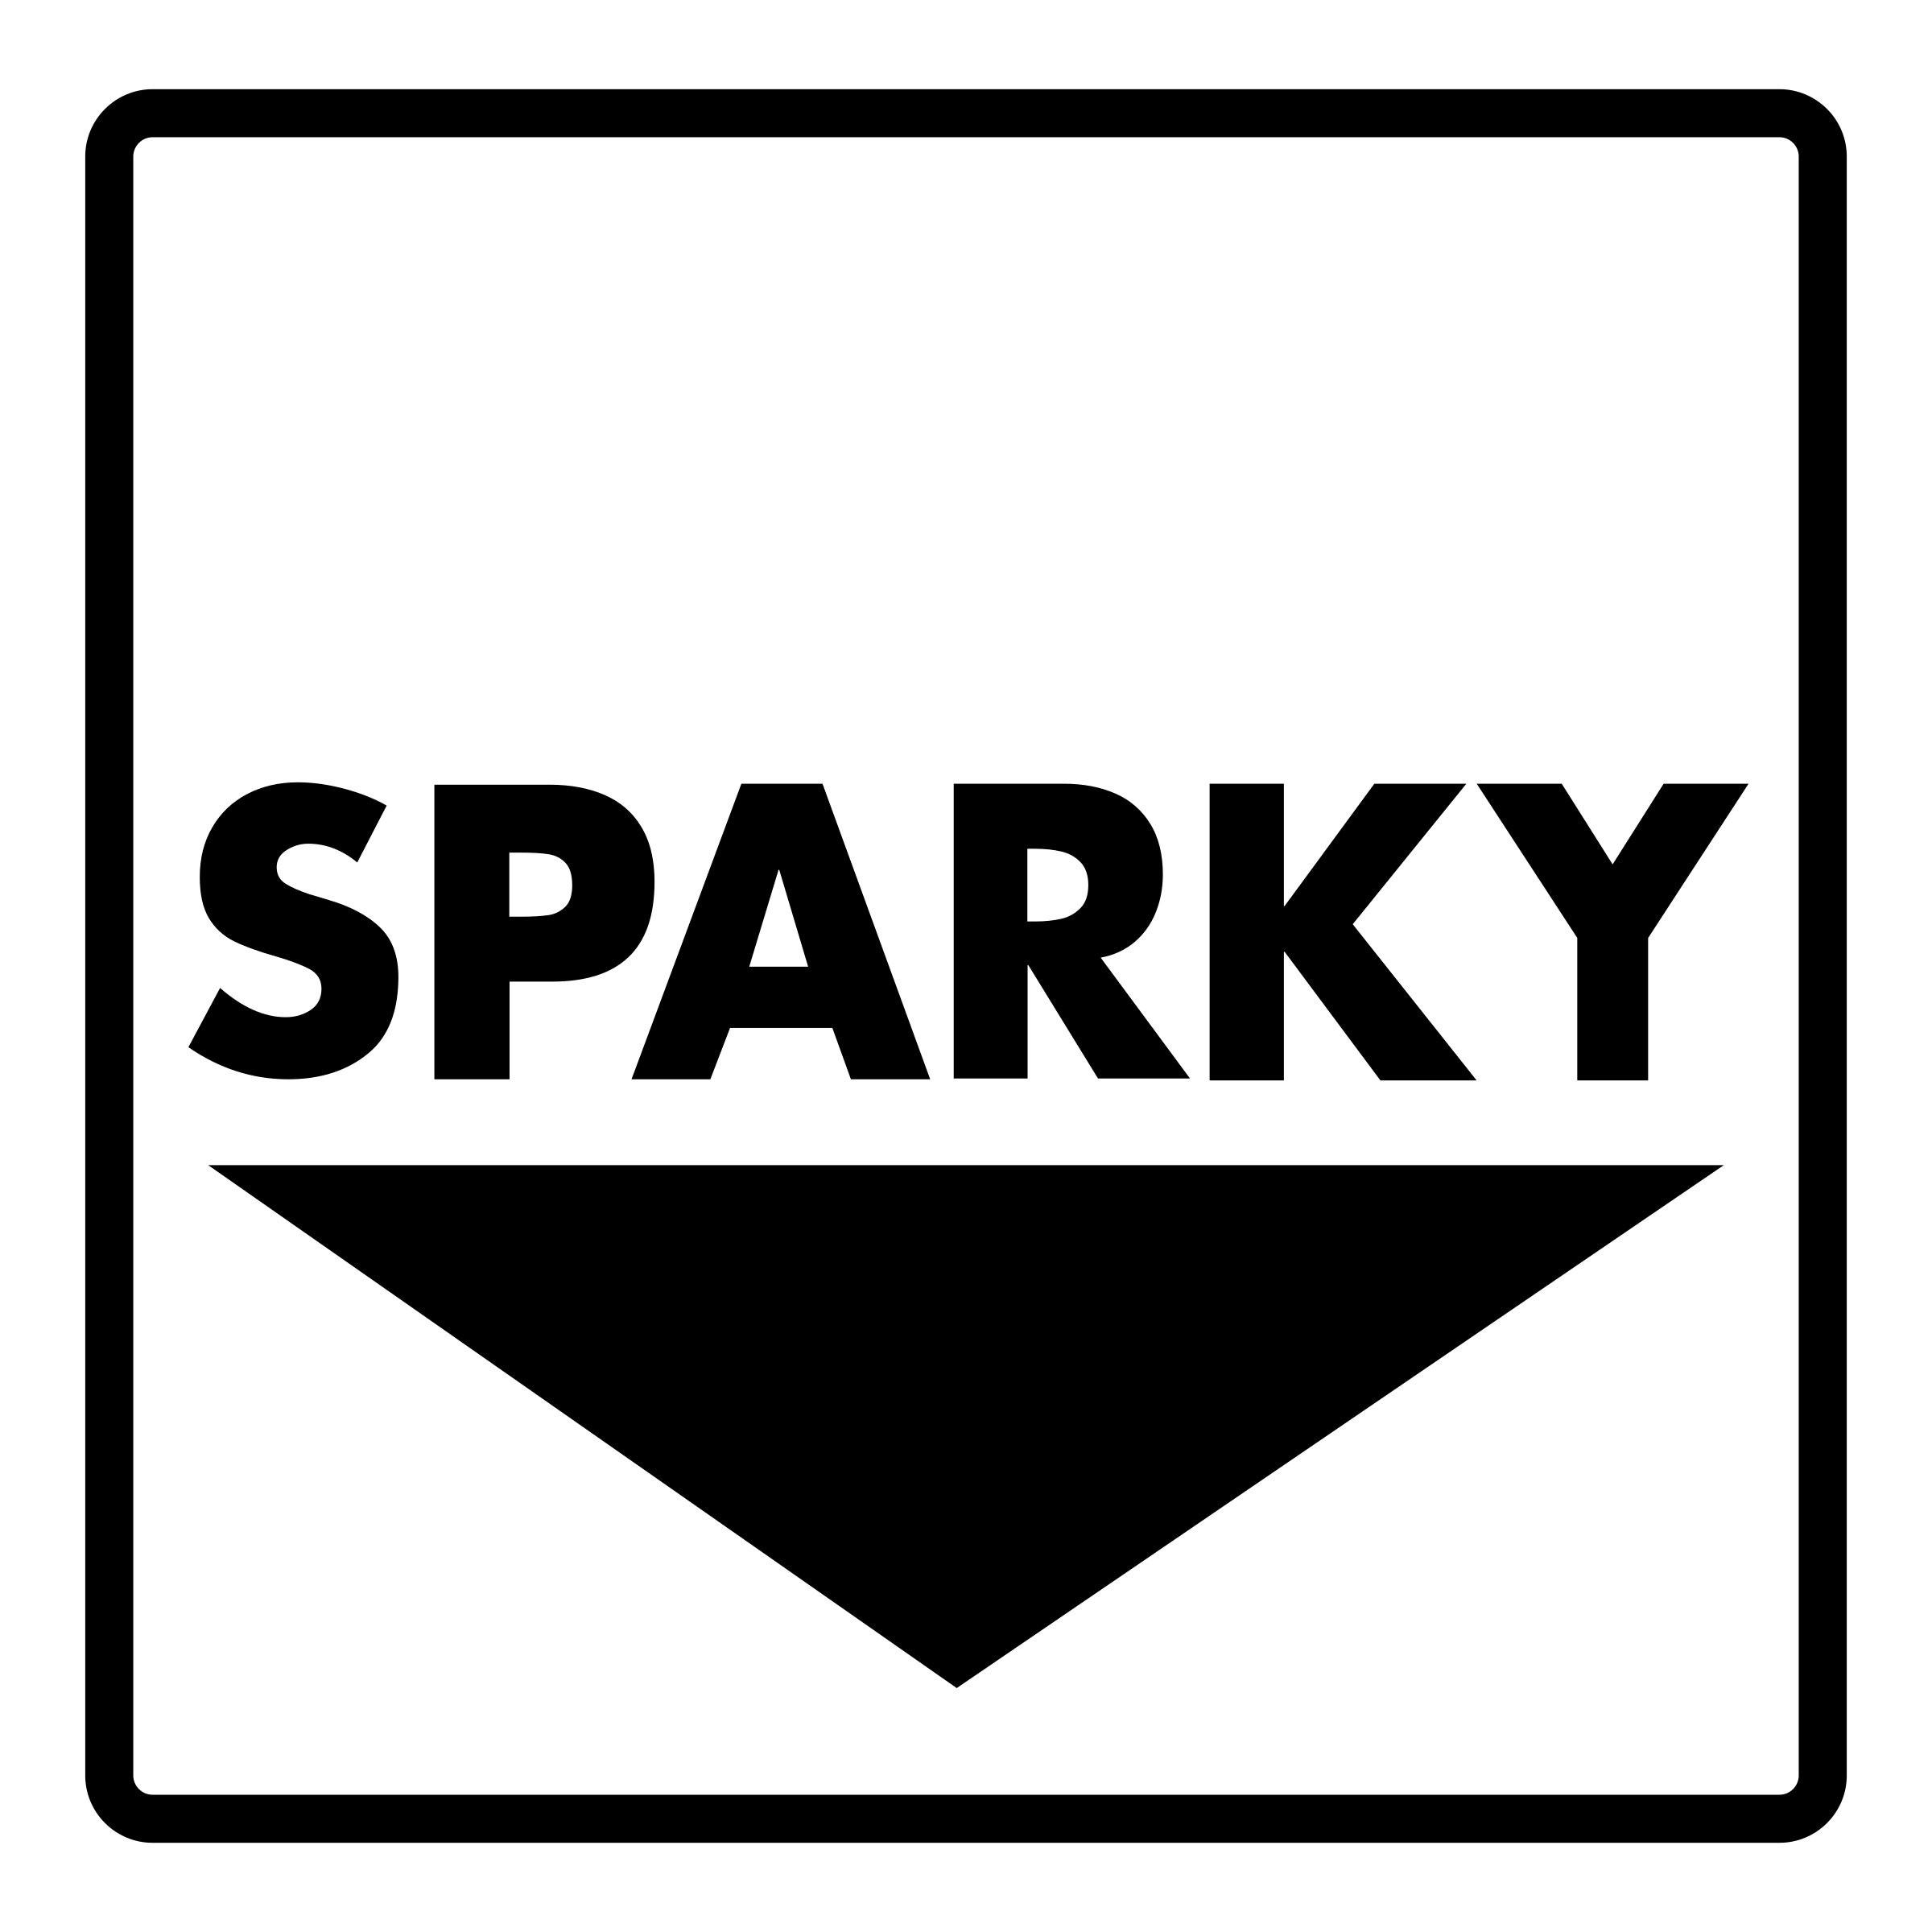 Sparky Logo - Sparky Logo PNG Transparent & SVG Vector